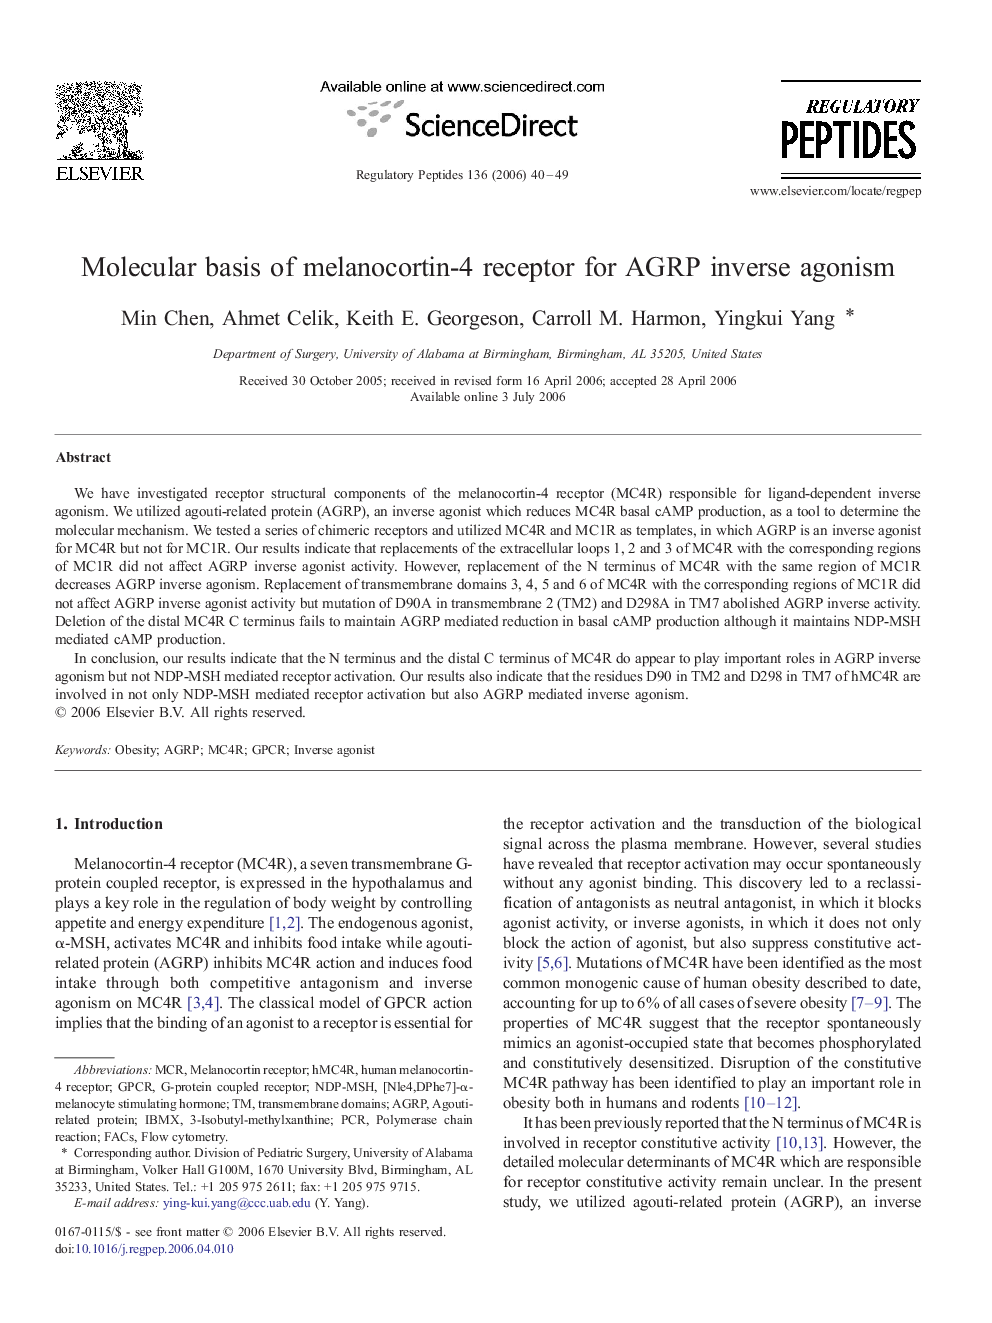 Molecular basis of melanocortin-4 receptor for AGRP inverse agonism